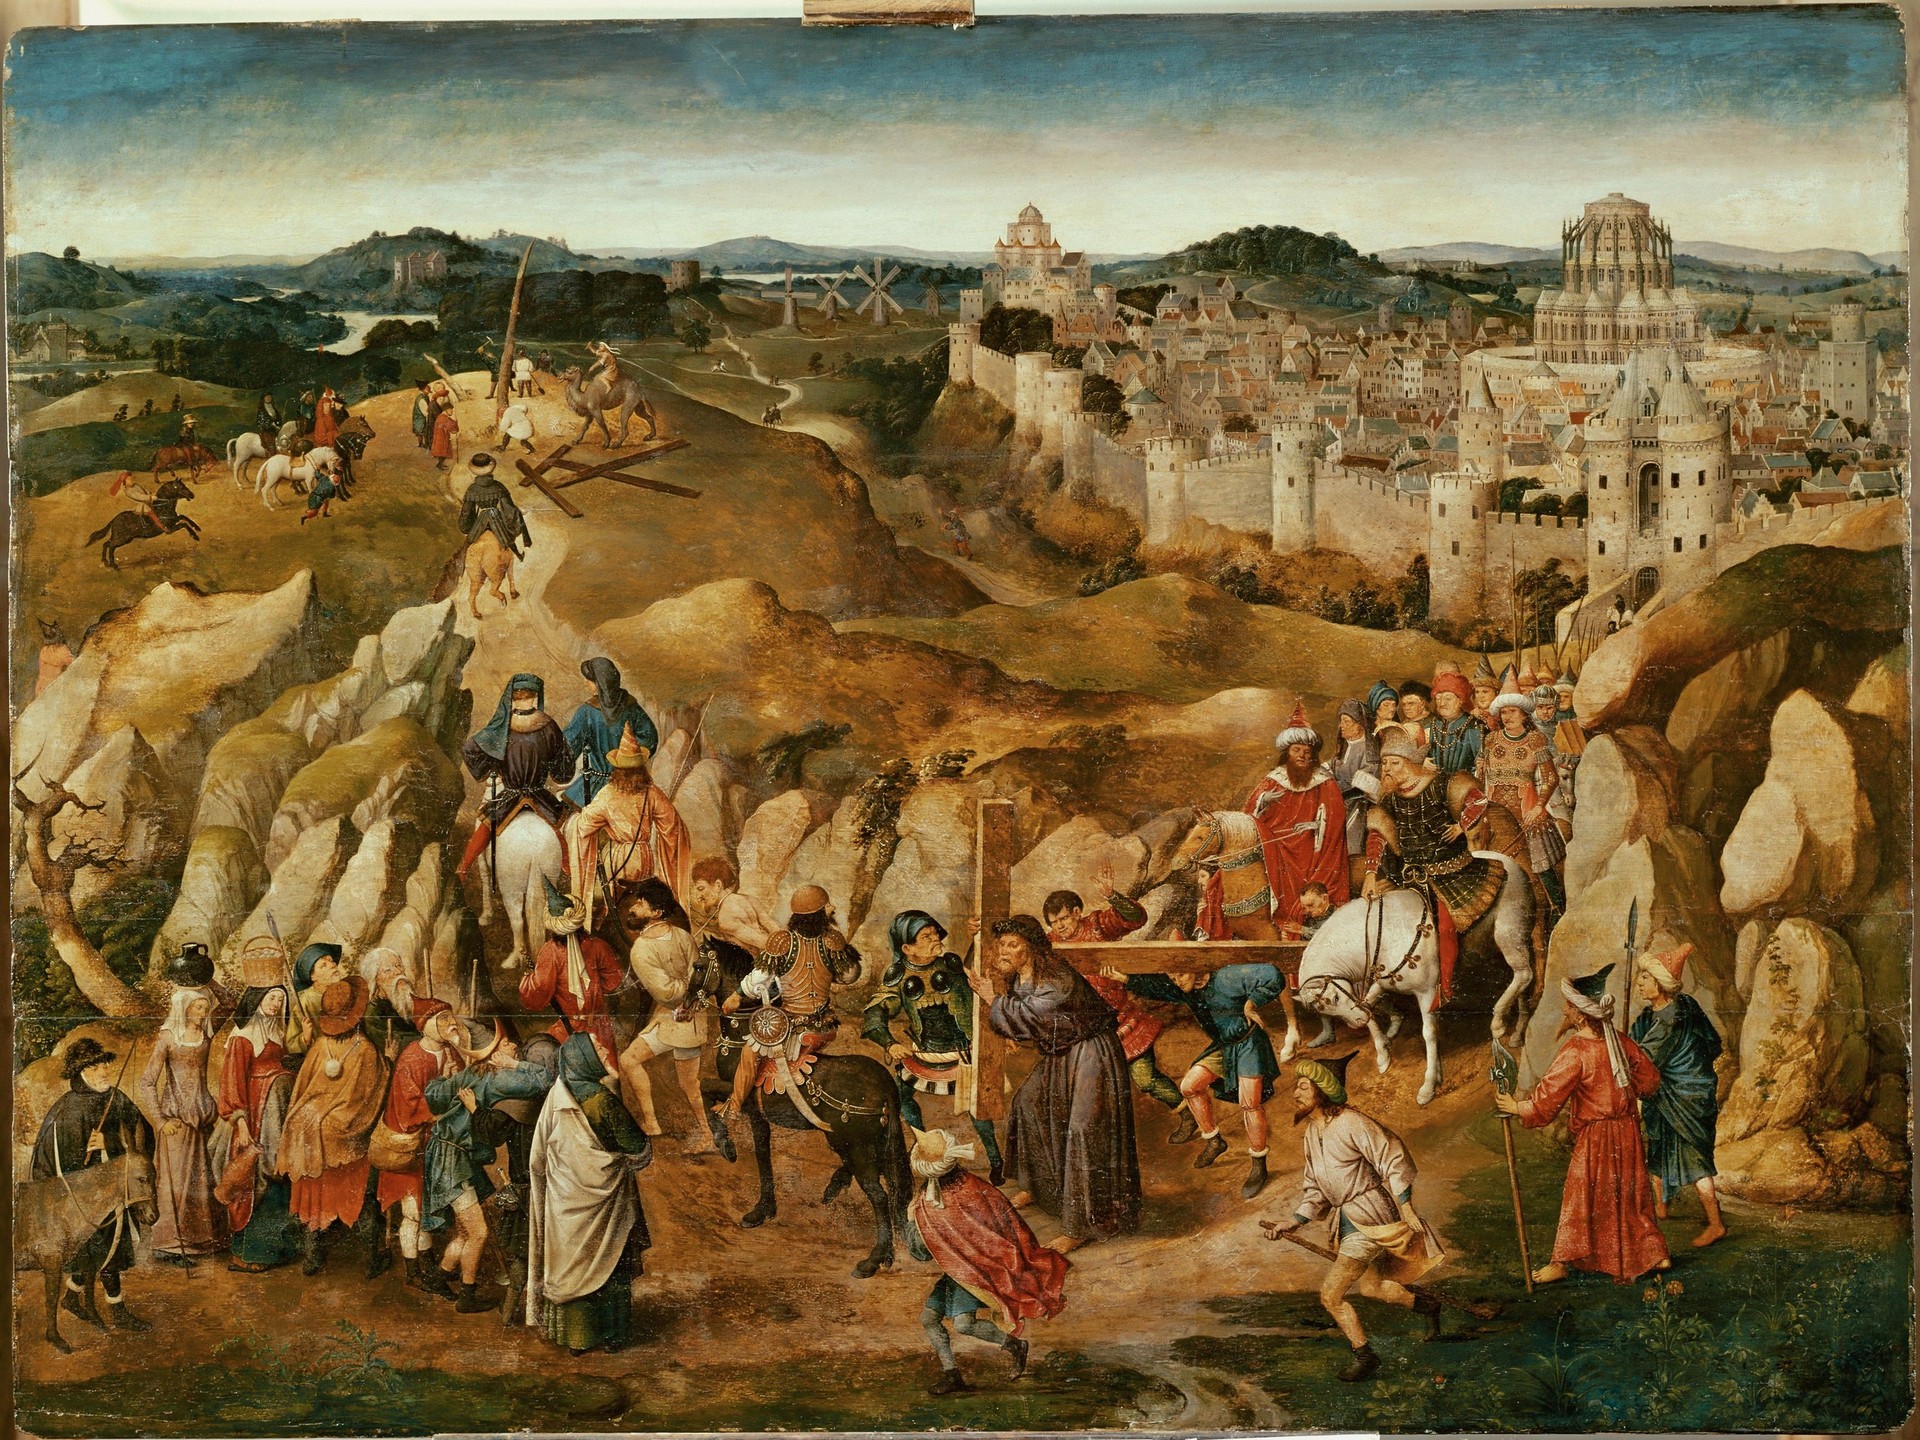 The Crucifixion by Jan Van Eyck